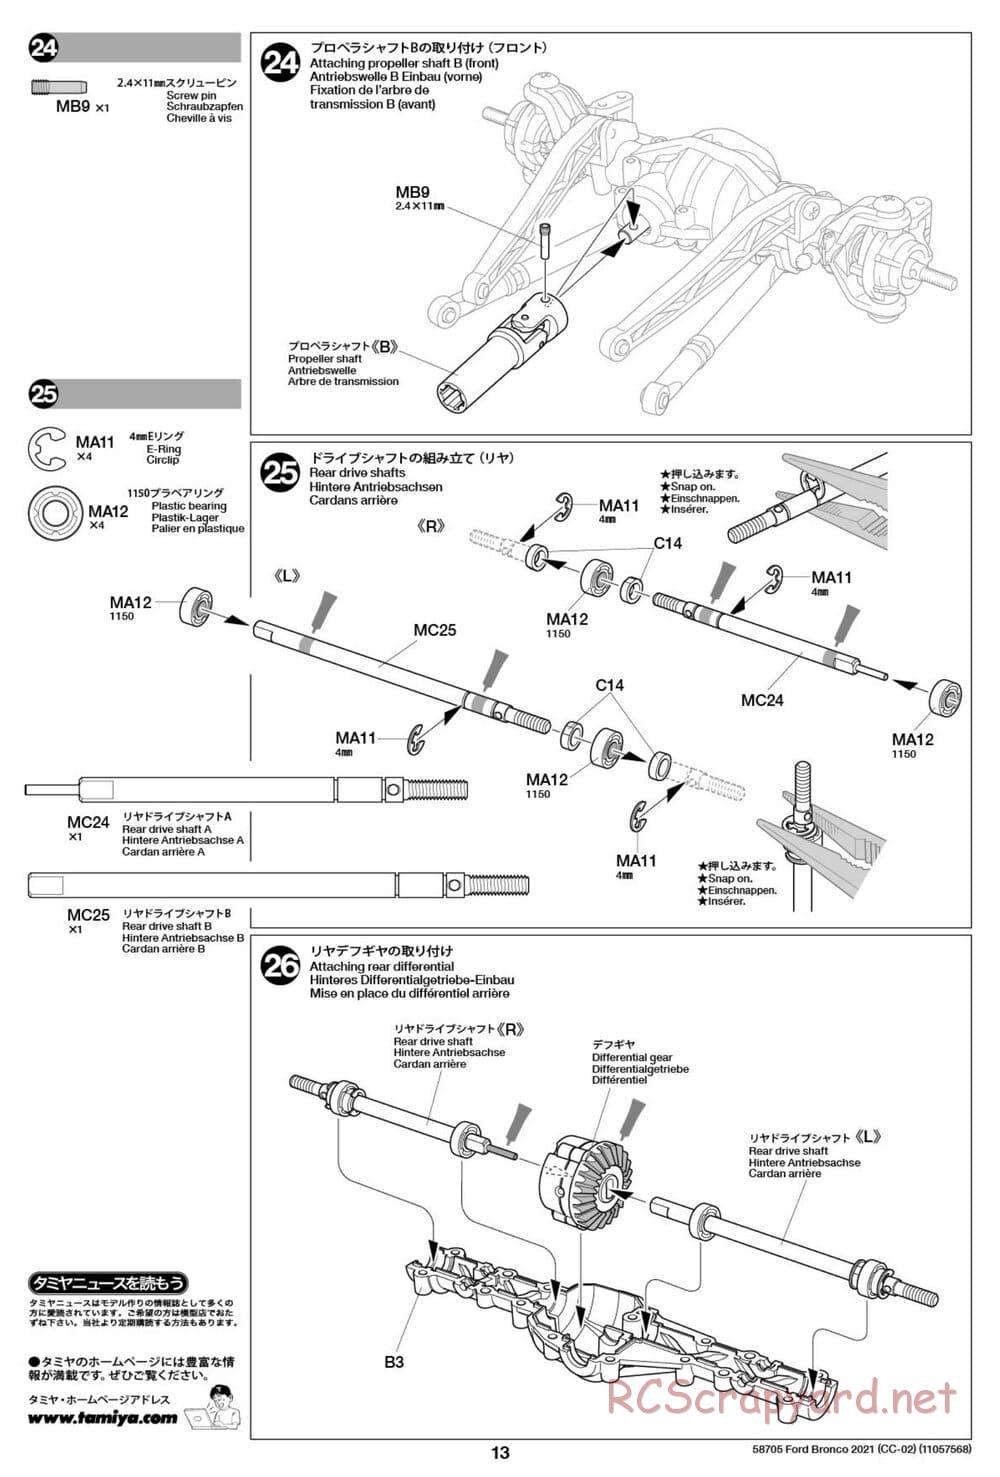 Tamiya - Ford Bronco 2021 - CC-02 Chassis - Manual - Page 13